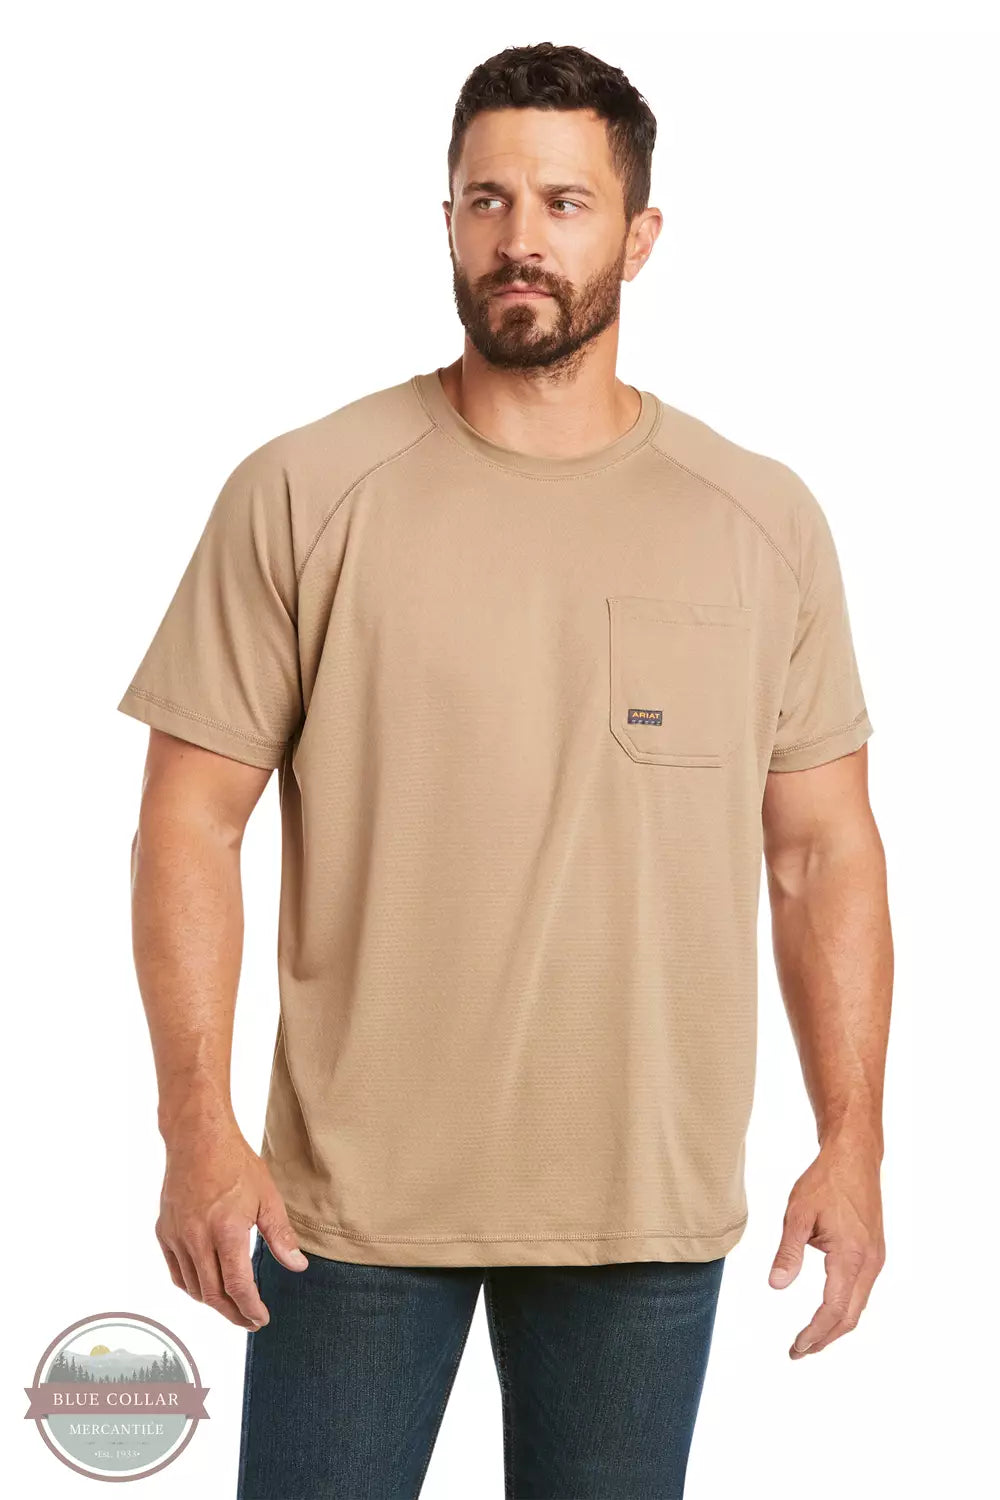 Ariat Men's Rebar Heat Fighter T-Shirt, Khaki M